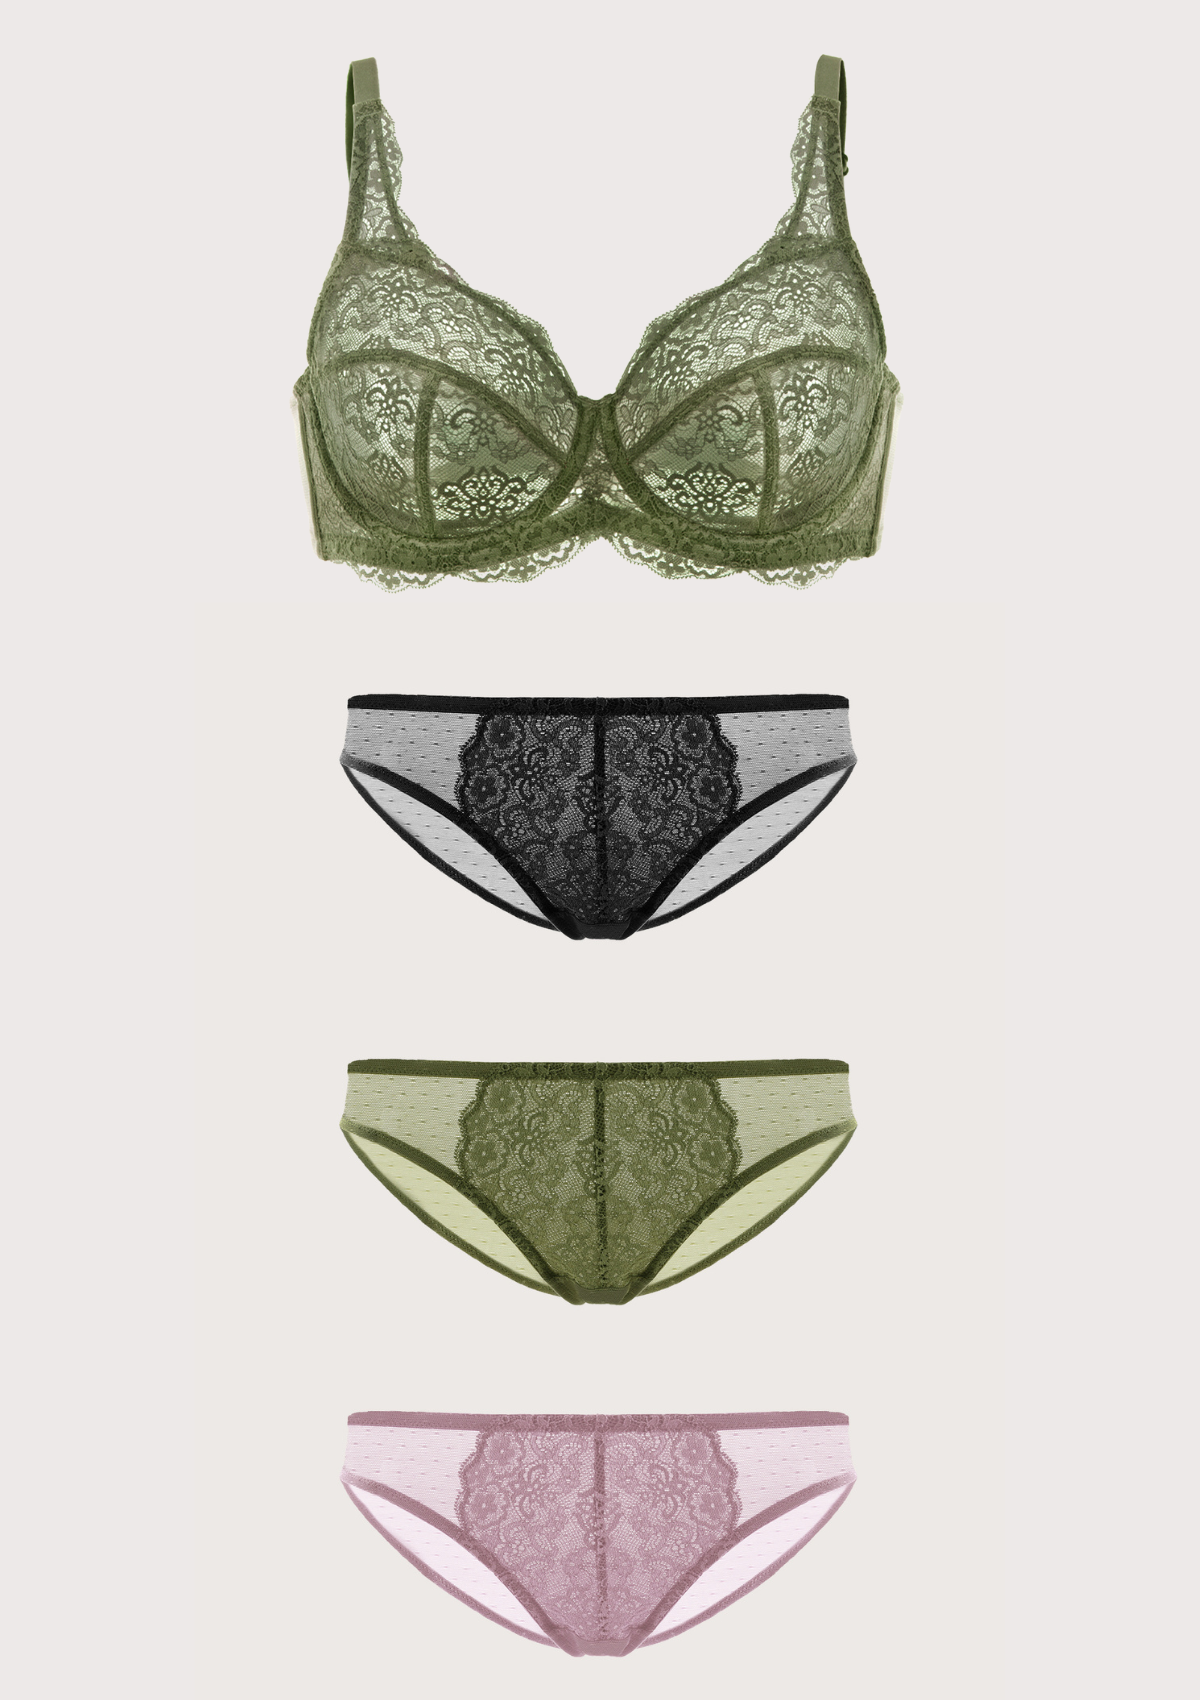 HSIA All-Over Floral Lace Unlined Bra: Minimizer Bra For Heavy Breasts - Dark Green / 36 / DD/E